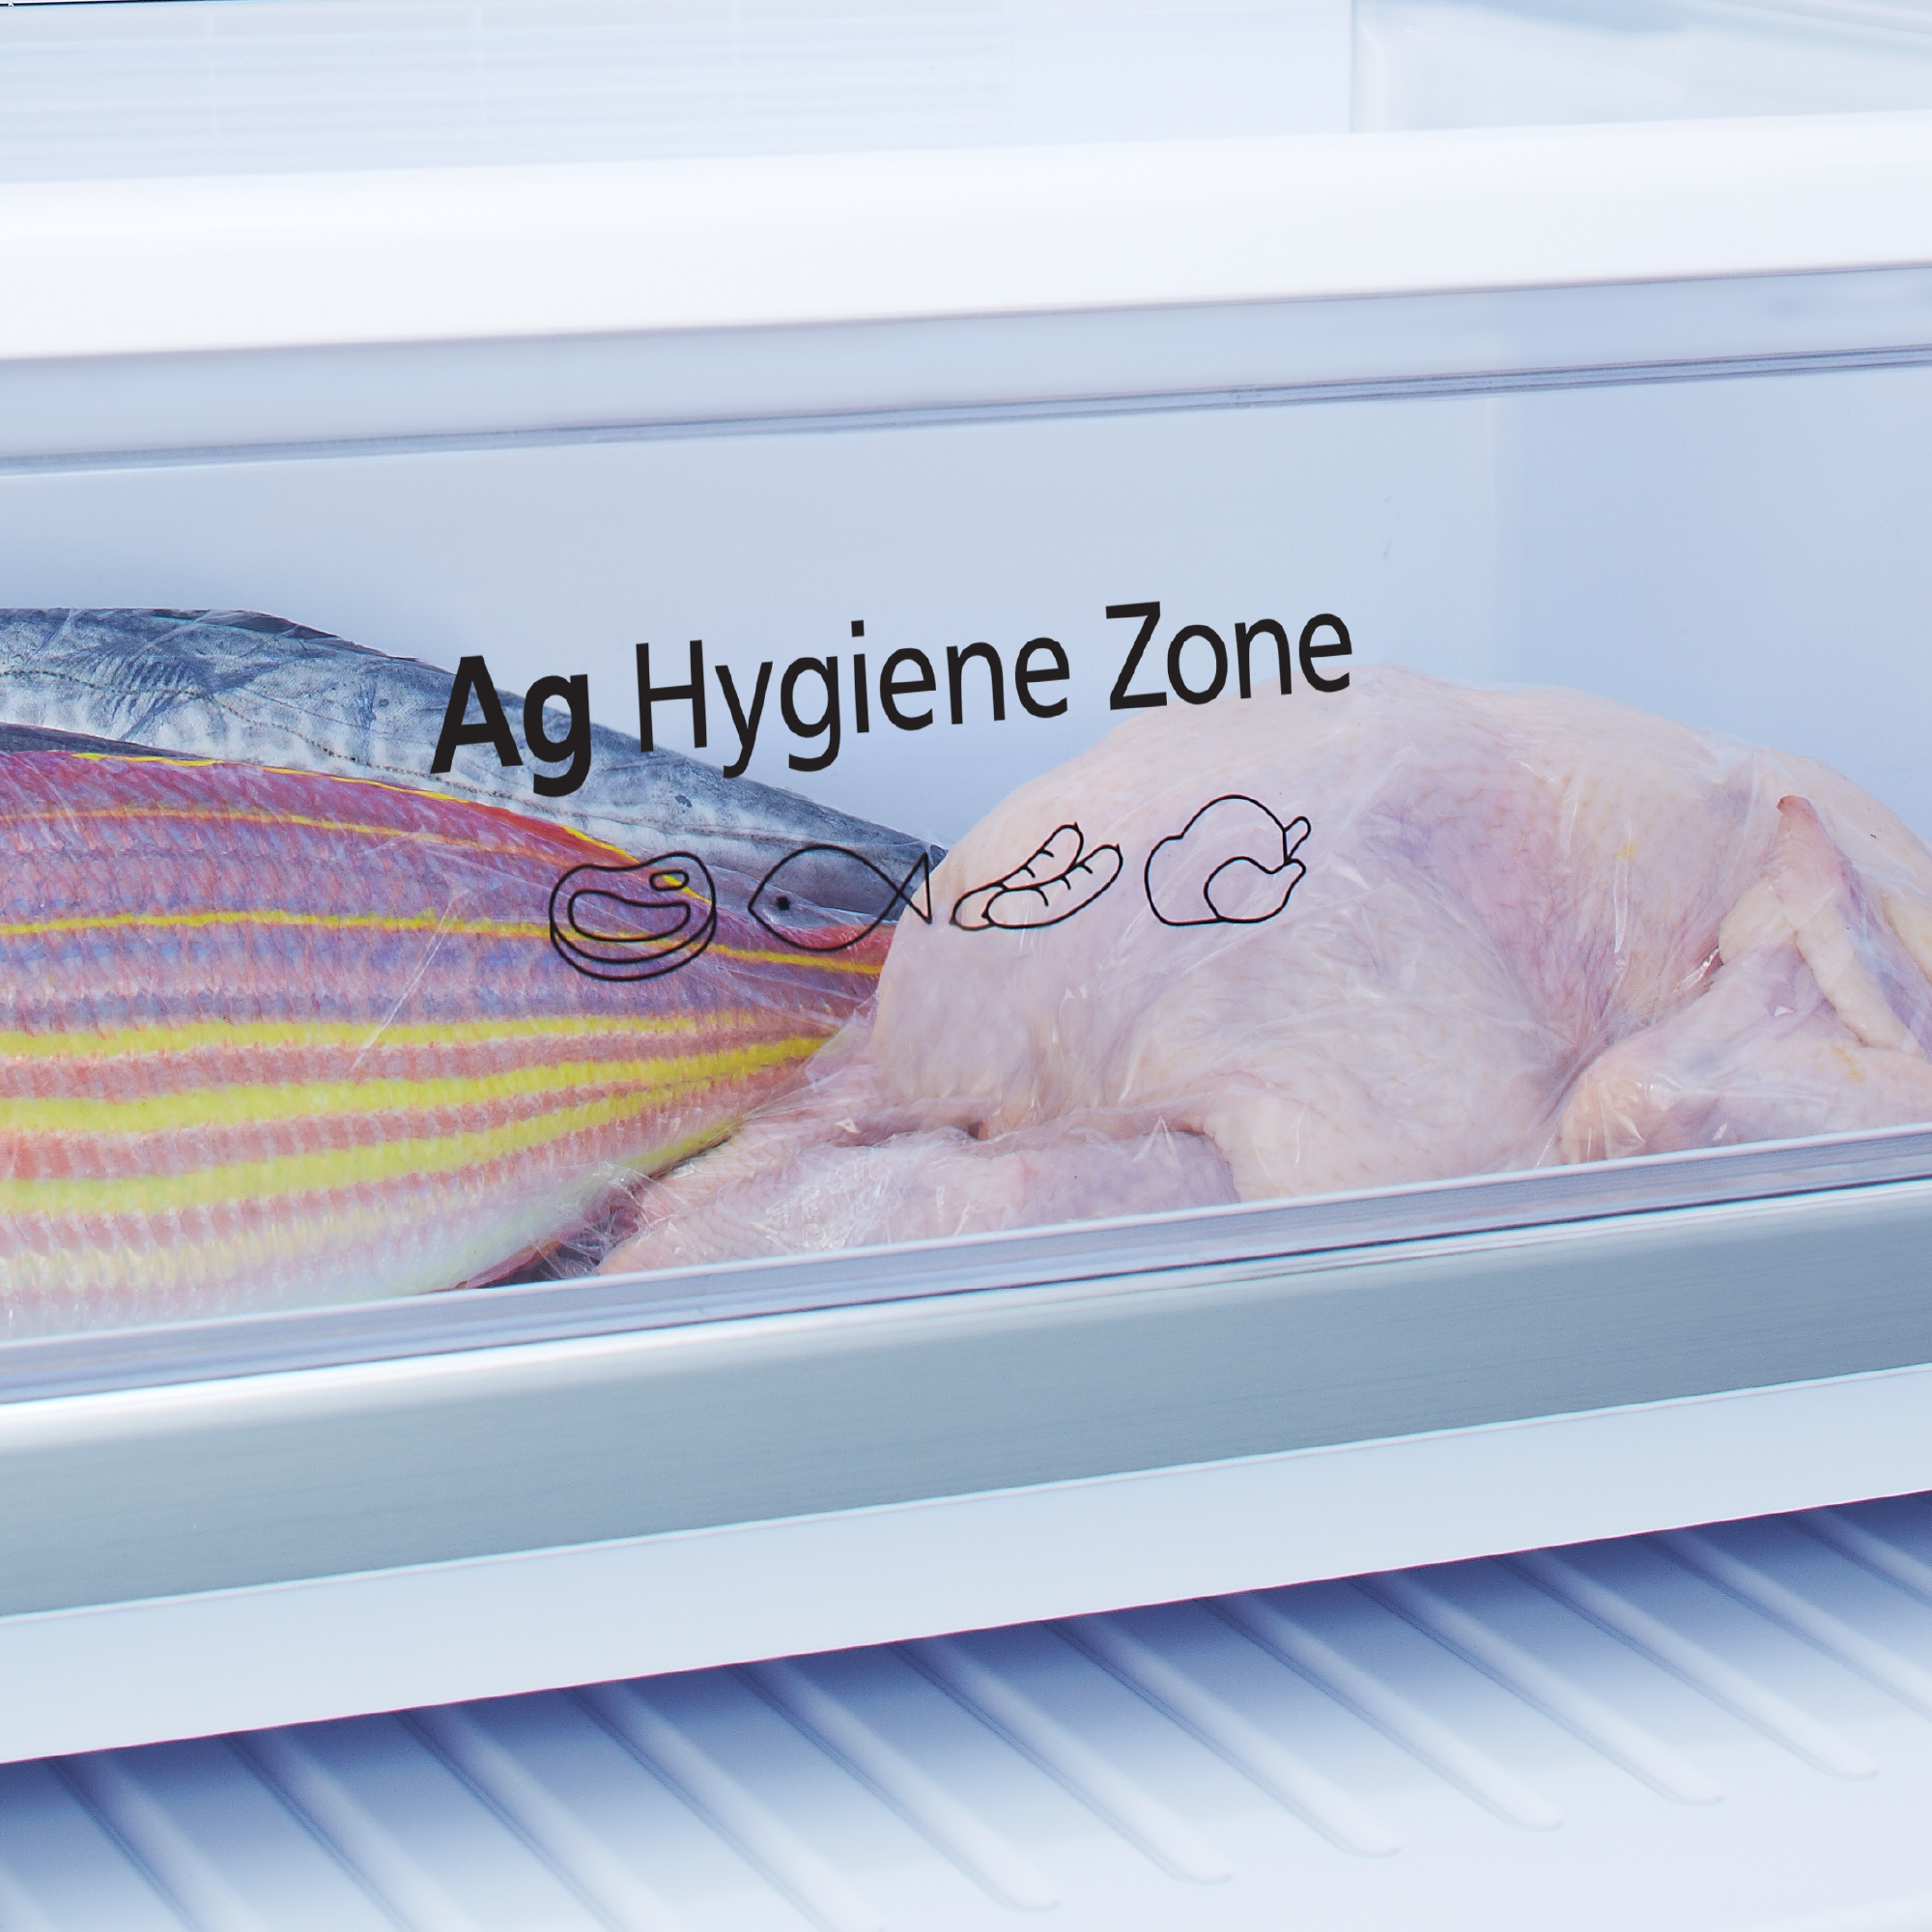 Ag Hygiene Zone